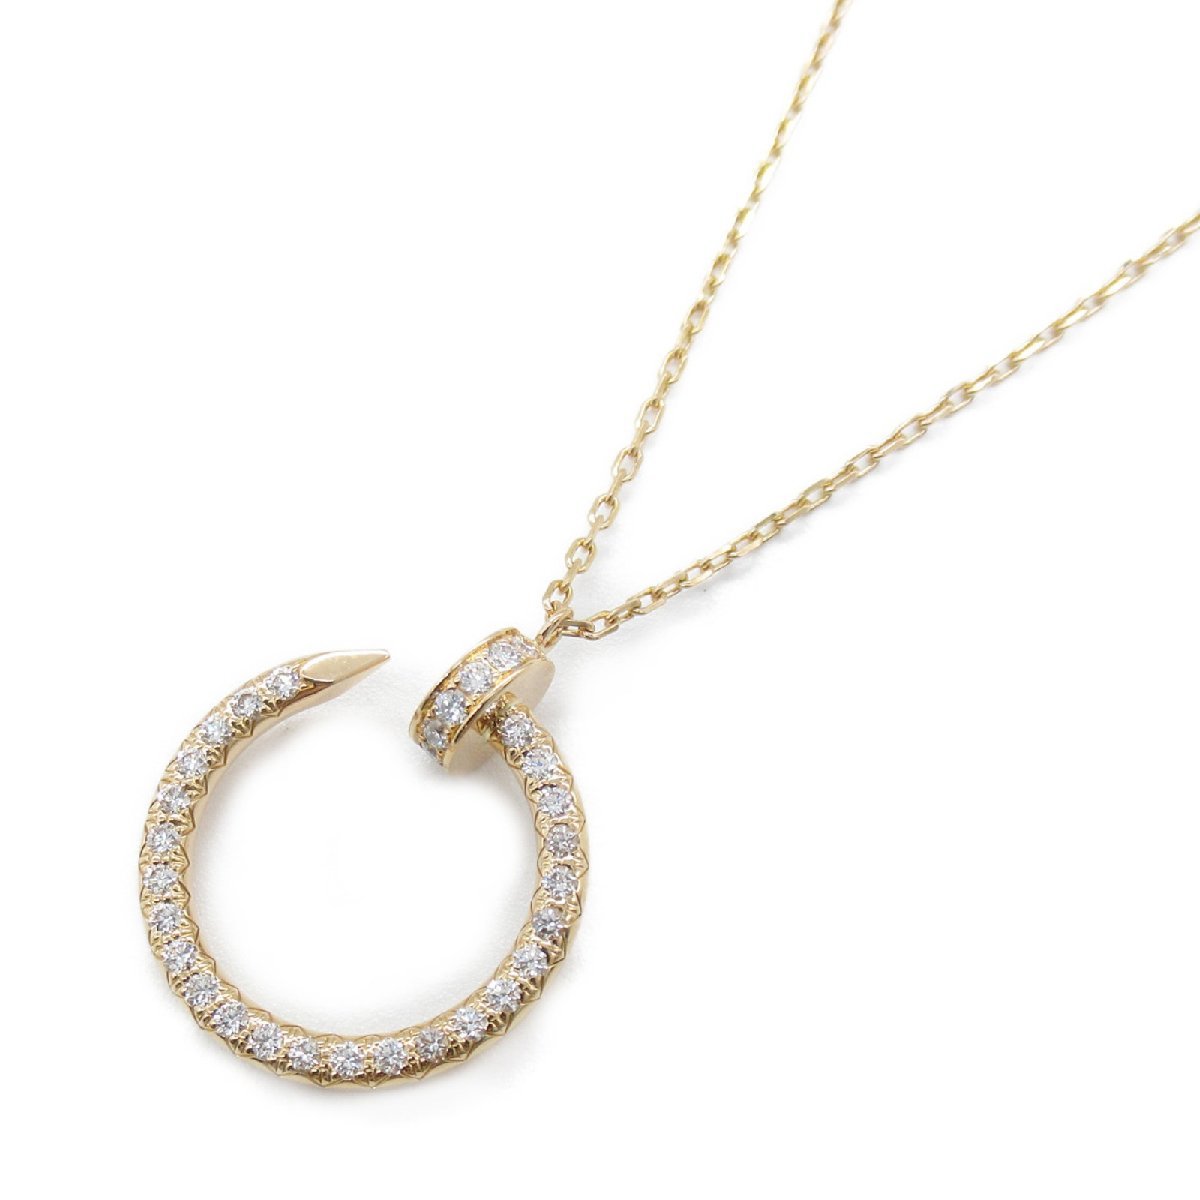  Cartier ju -stroke ankle diamond necklace brand off CARTIER K18PG( pink gold ) necklace 750PG used lady's 